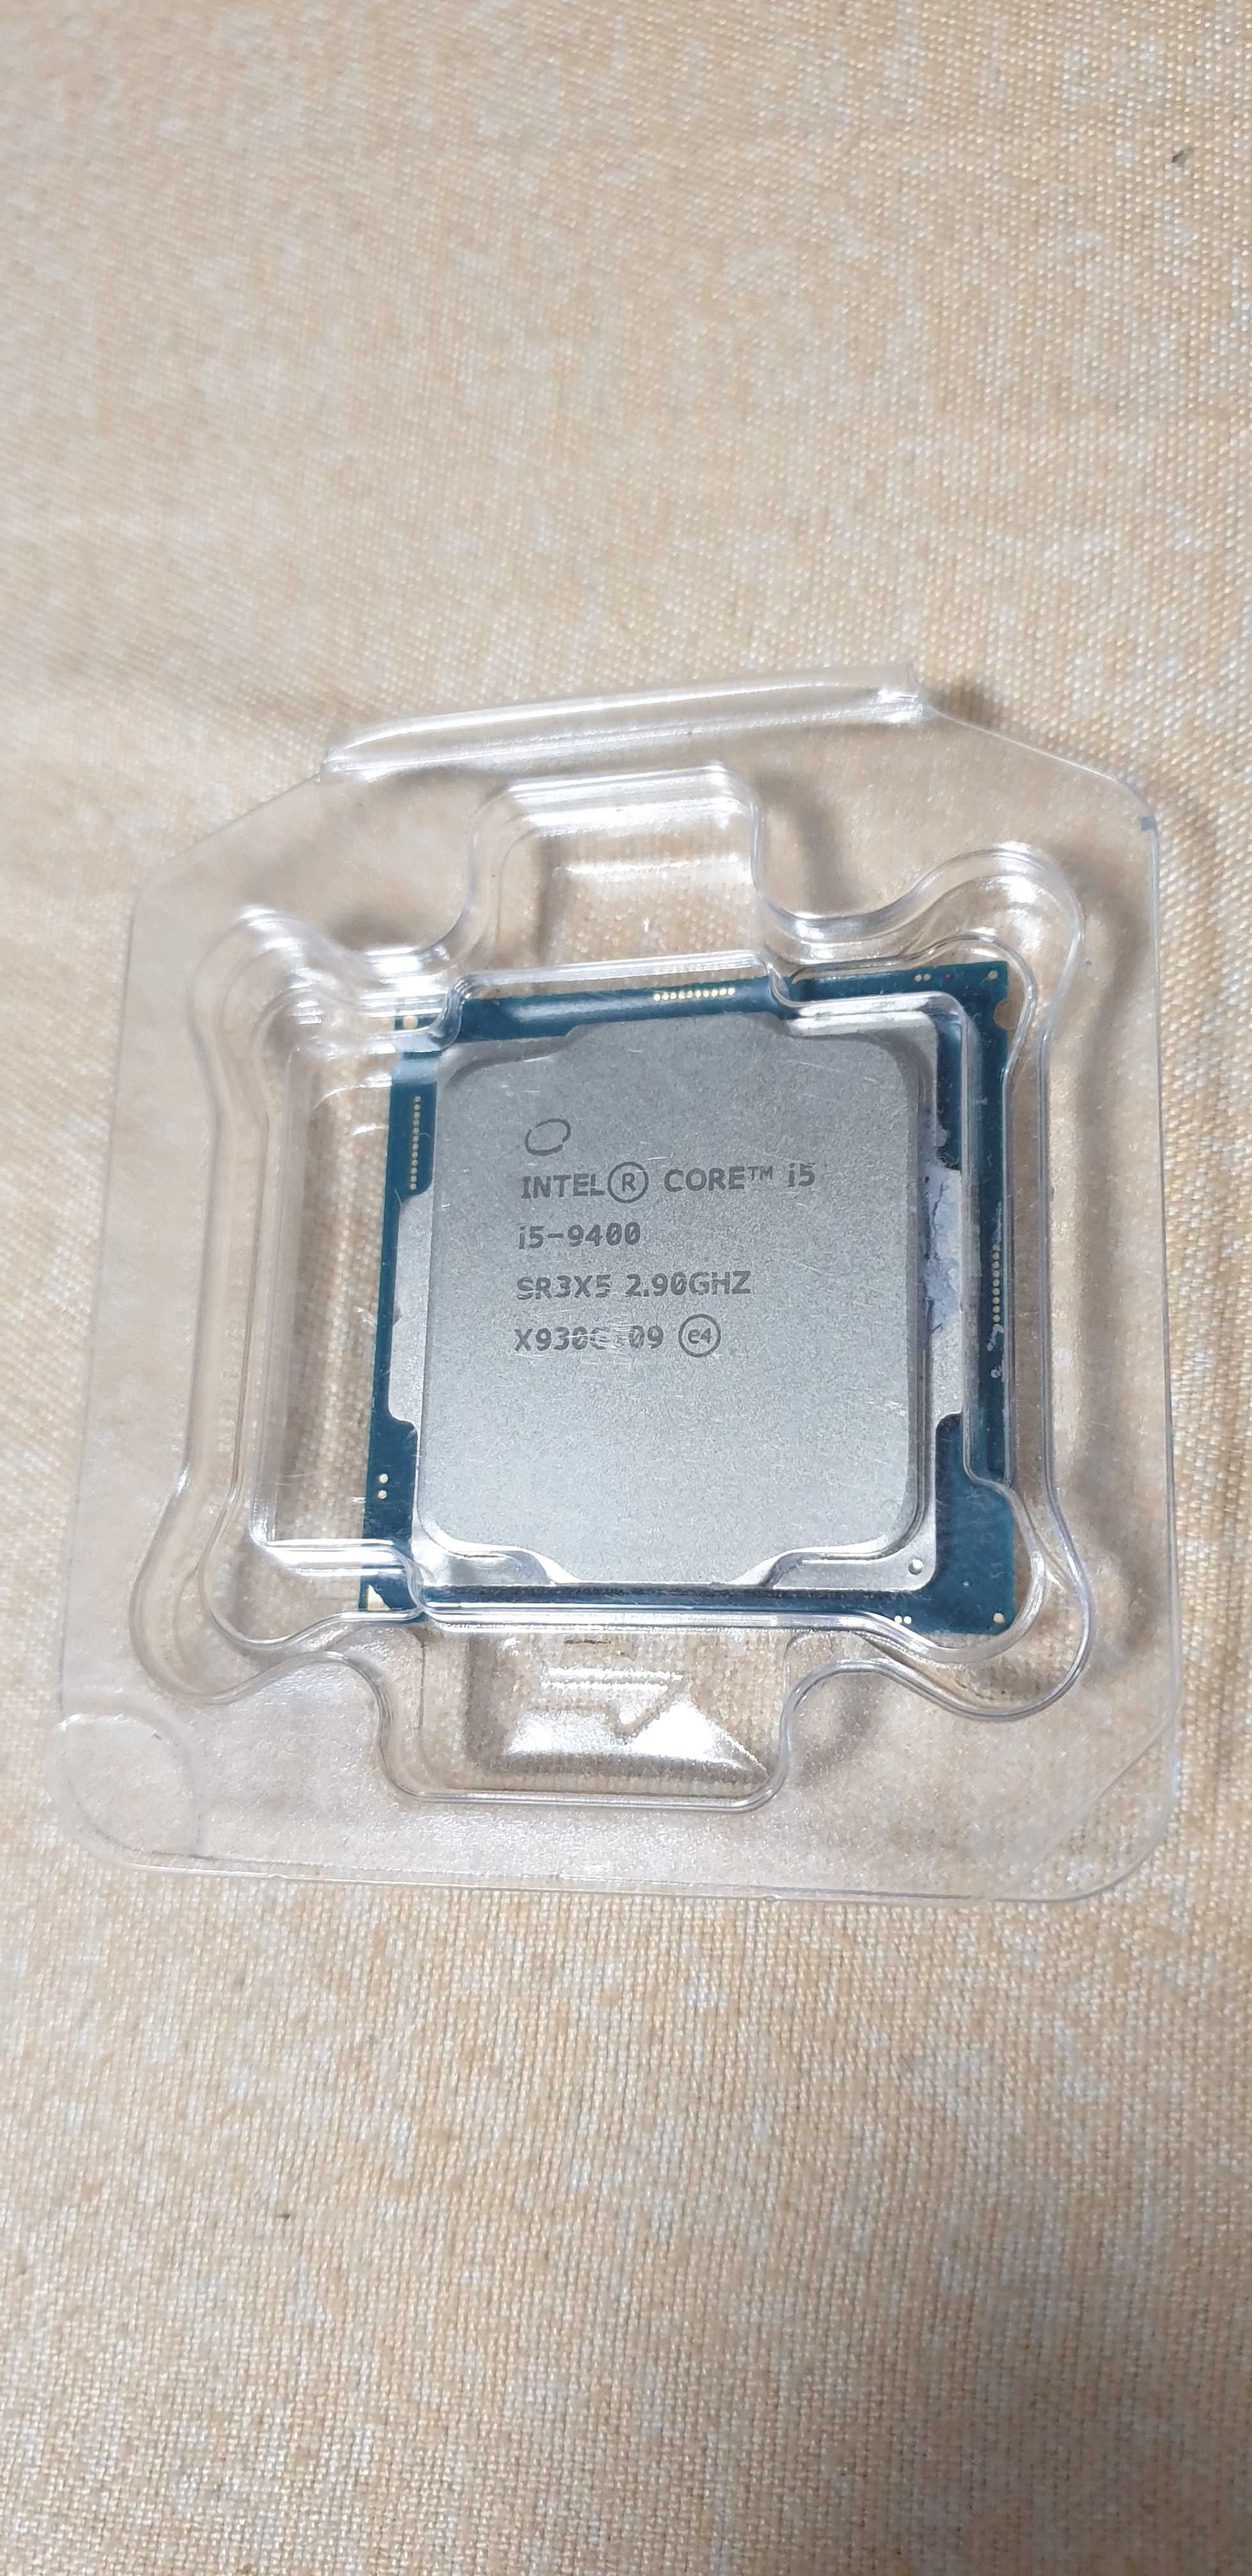 Procesor Intel Coffee Lake, Core i5 9400 2.9GHz soket 1151